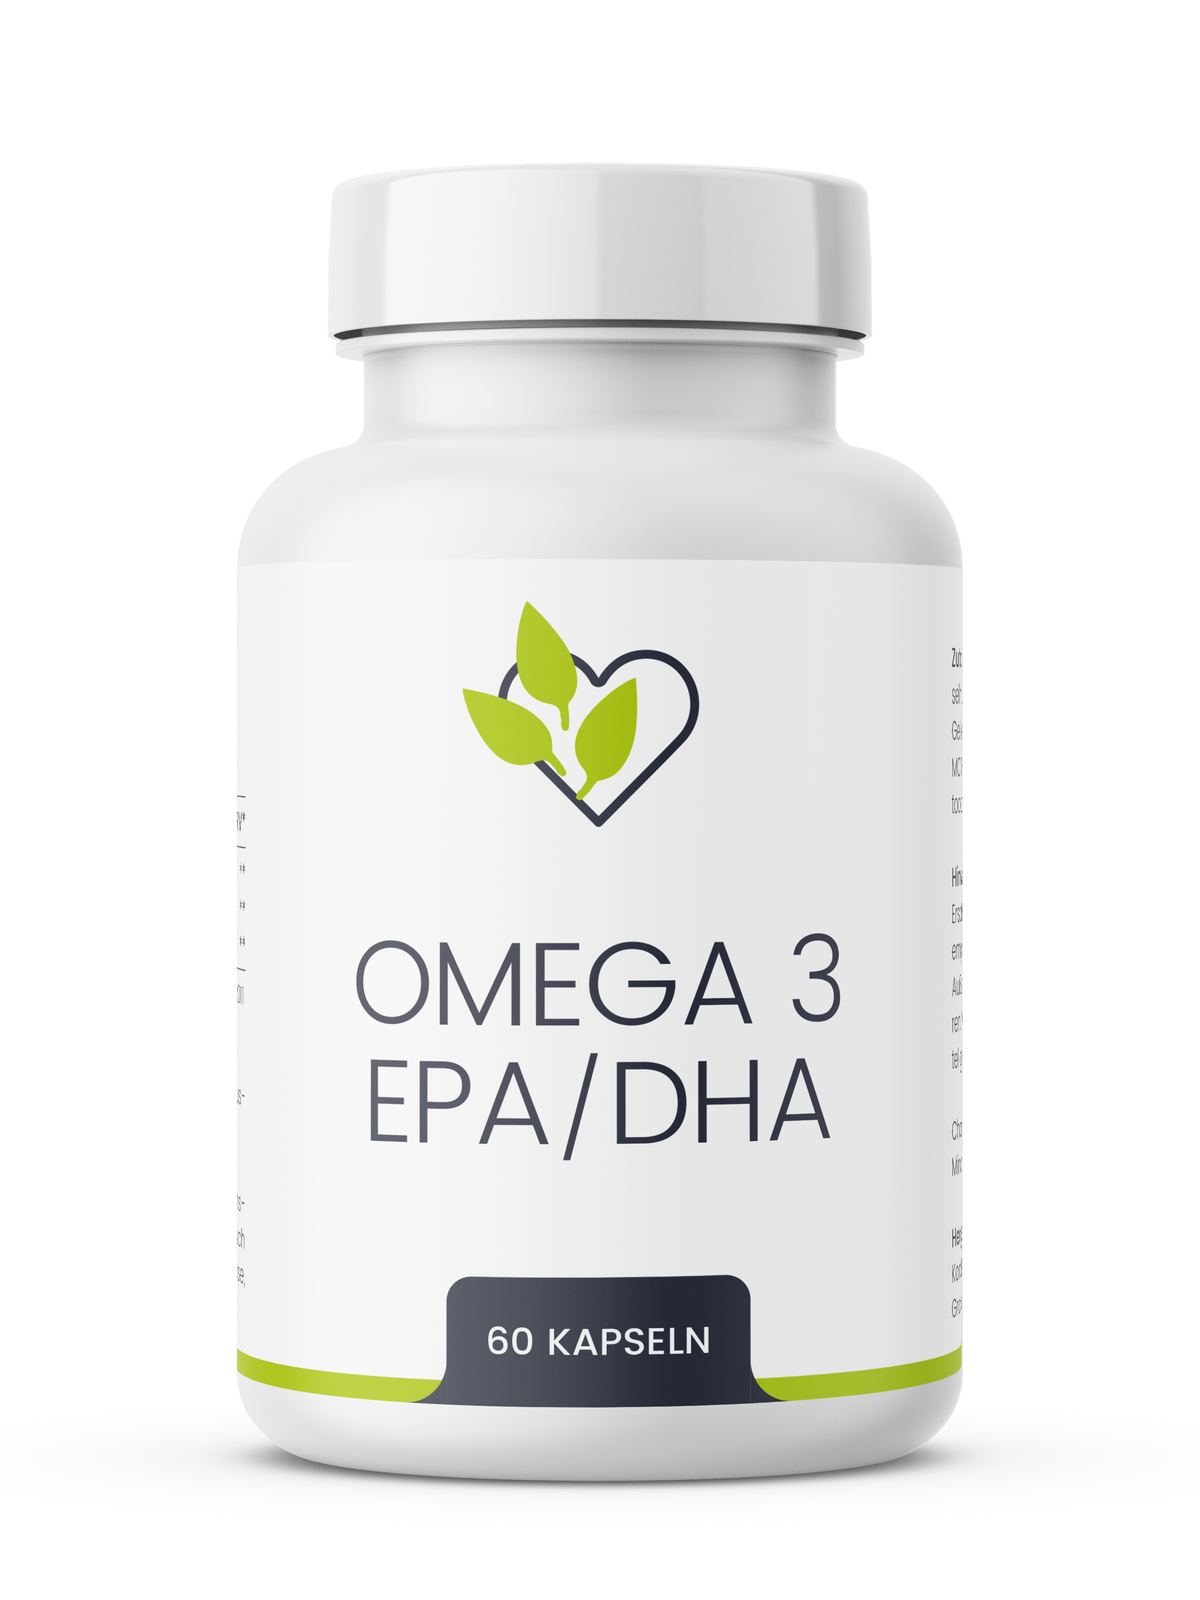 Omega 3 vegan EPA/DHA Premium